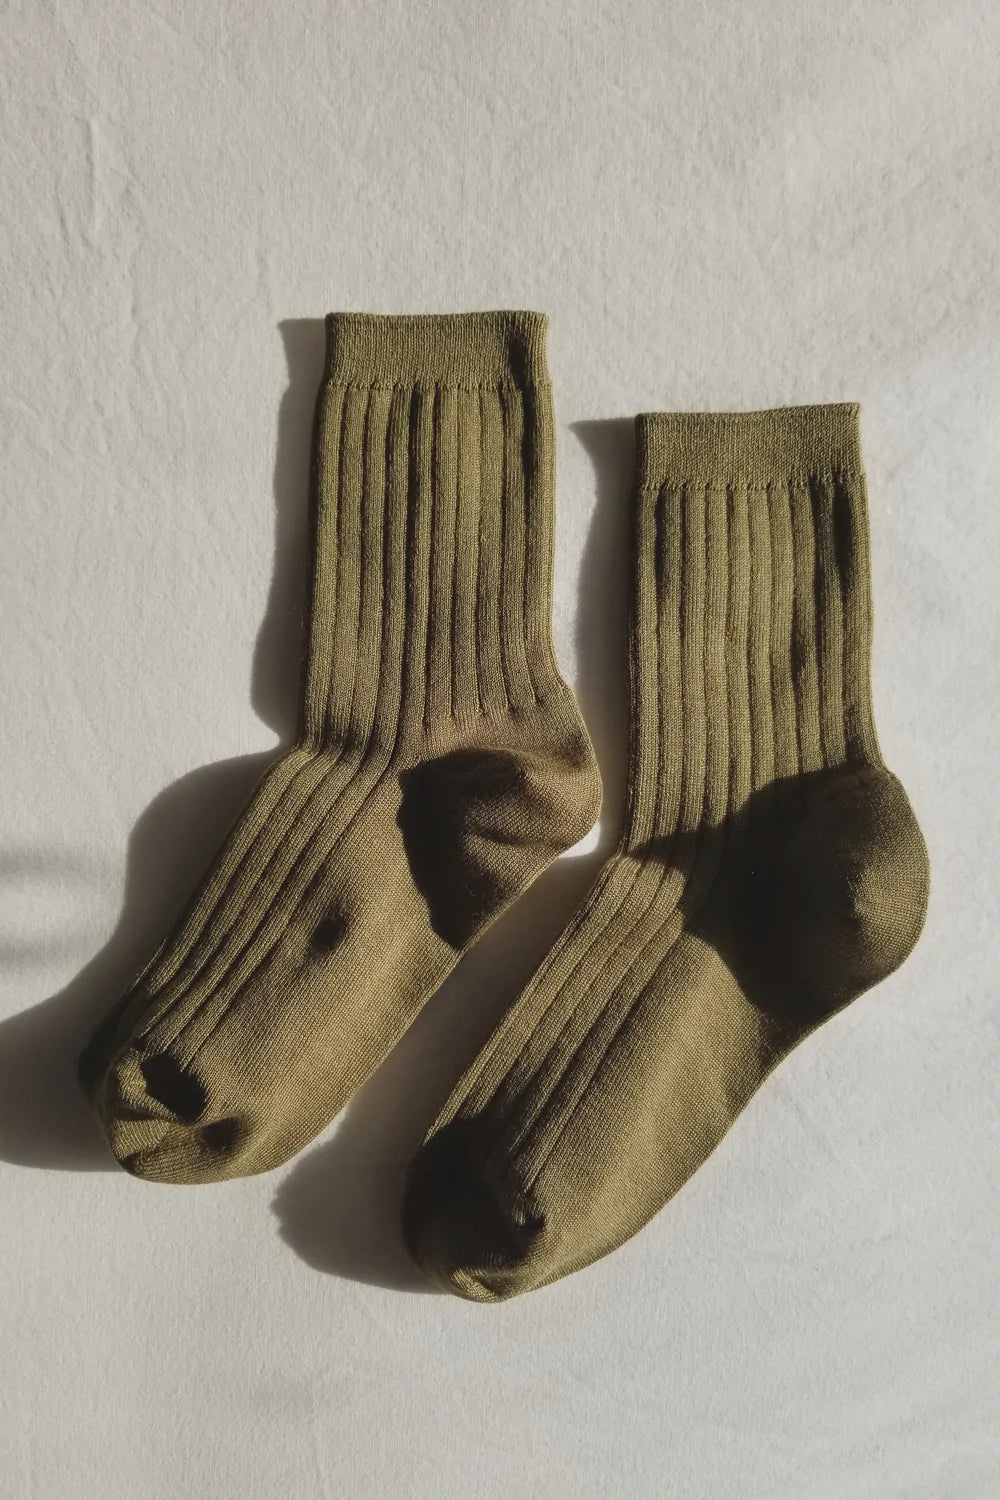 Twentyseven Toronto - Le Bon Shoppe Her Socks (MC Cotton) - Pesto